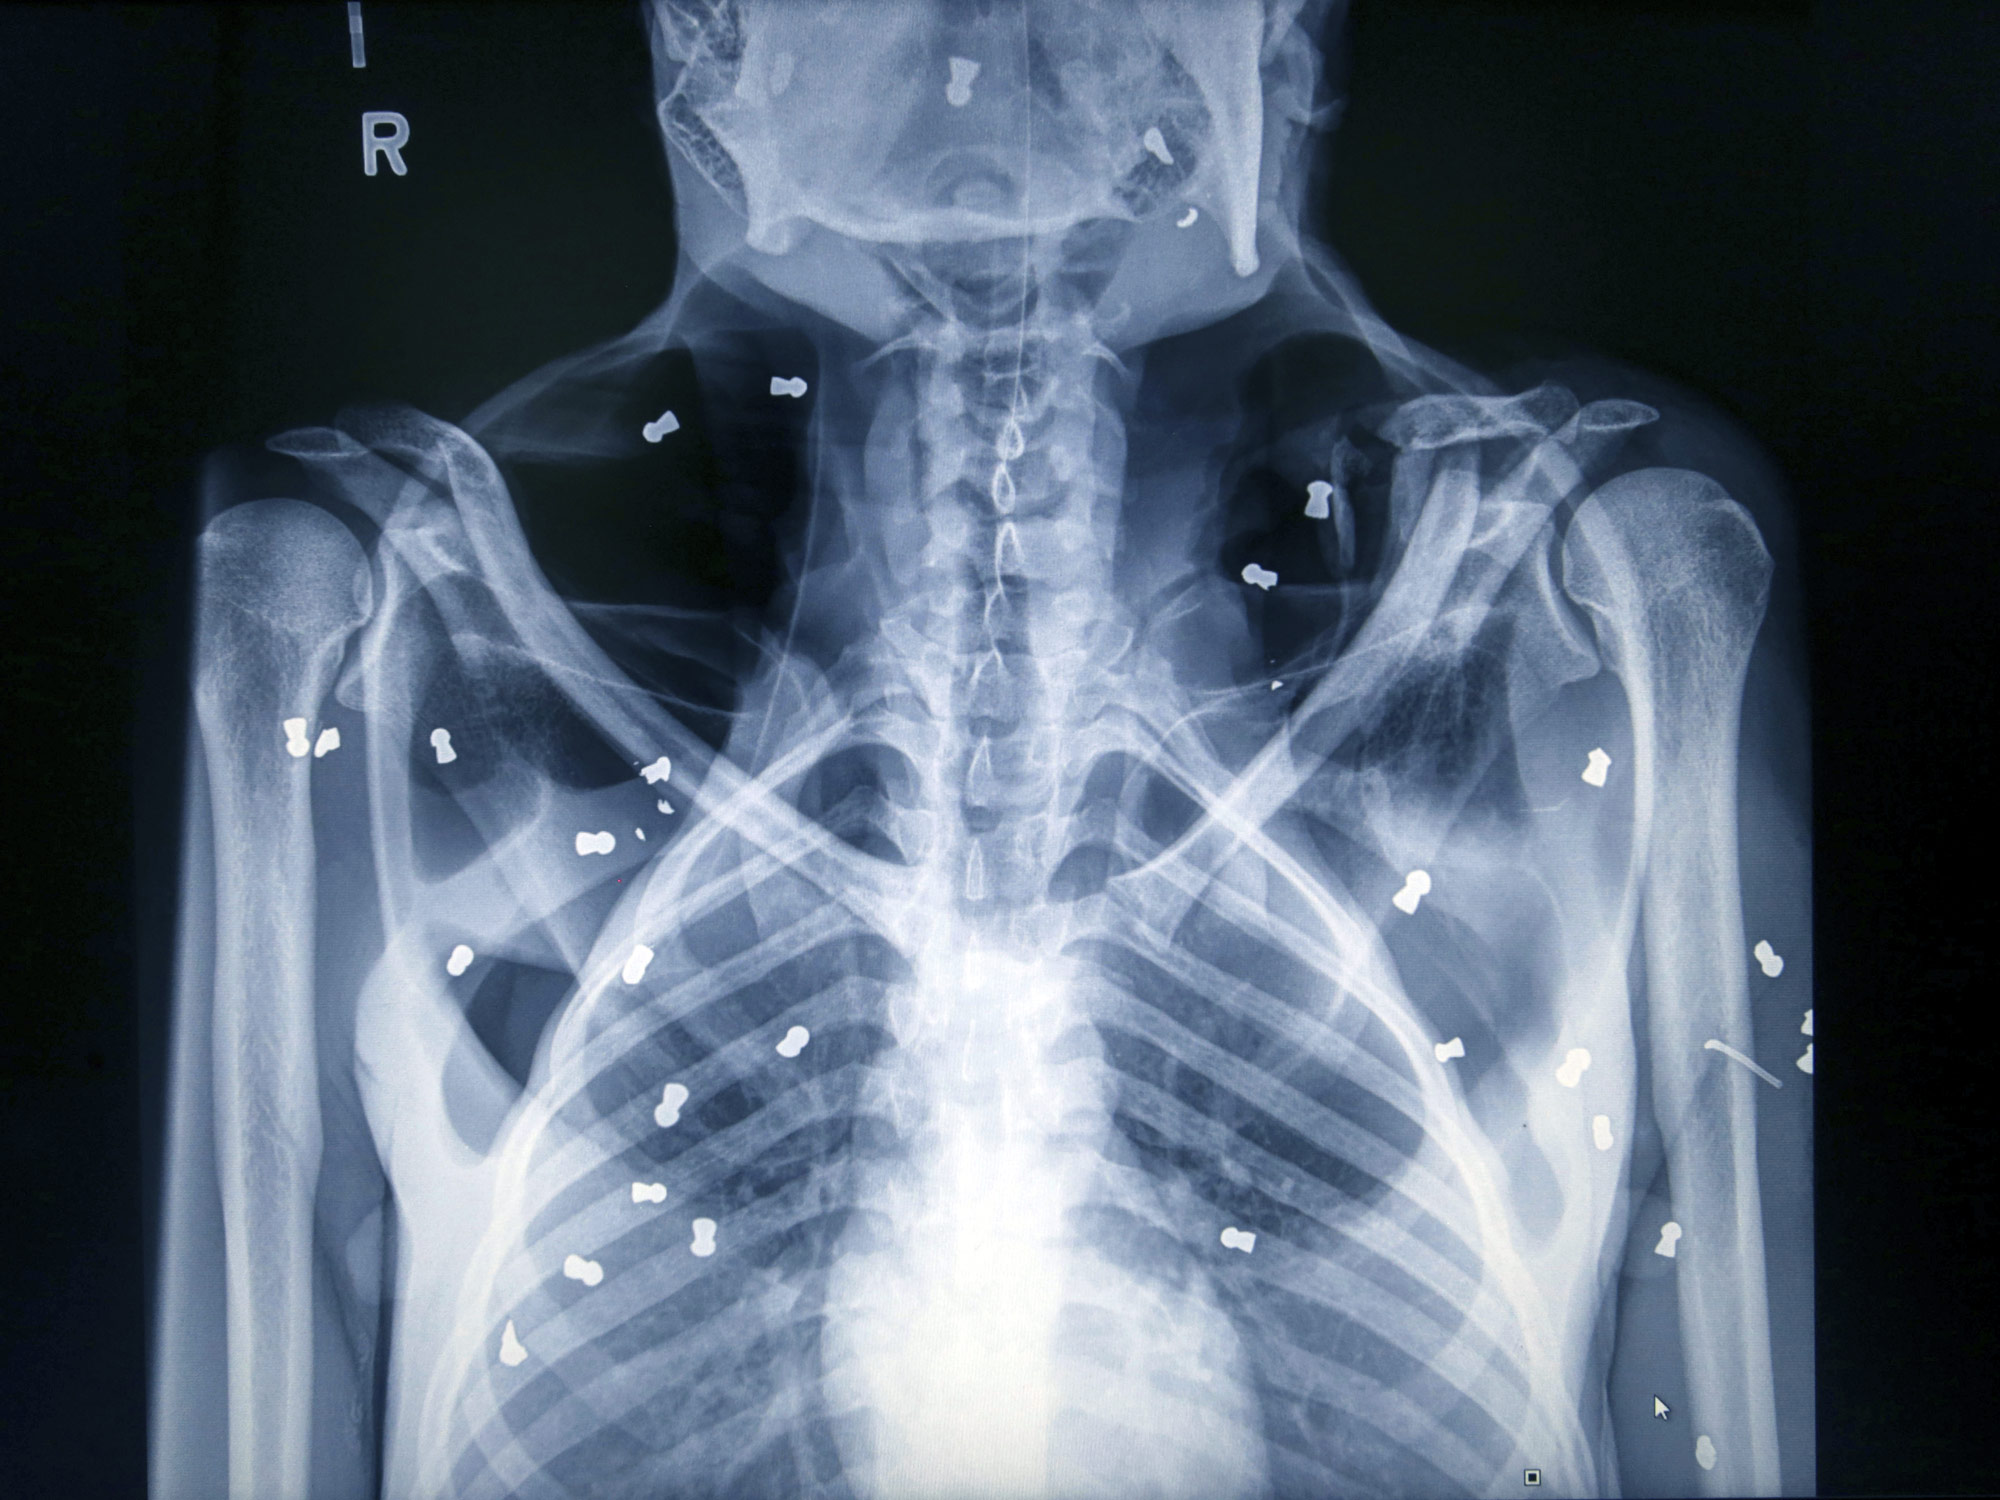 An X-ray showing air rifle pellets inside the body of female orangutan Hope.